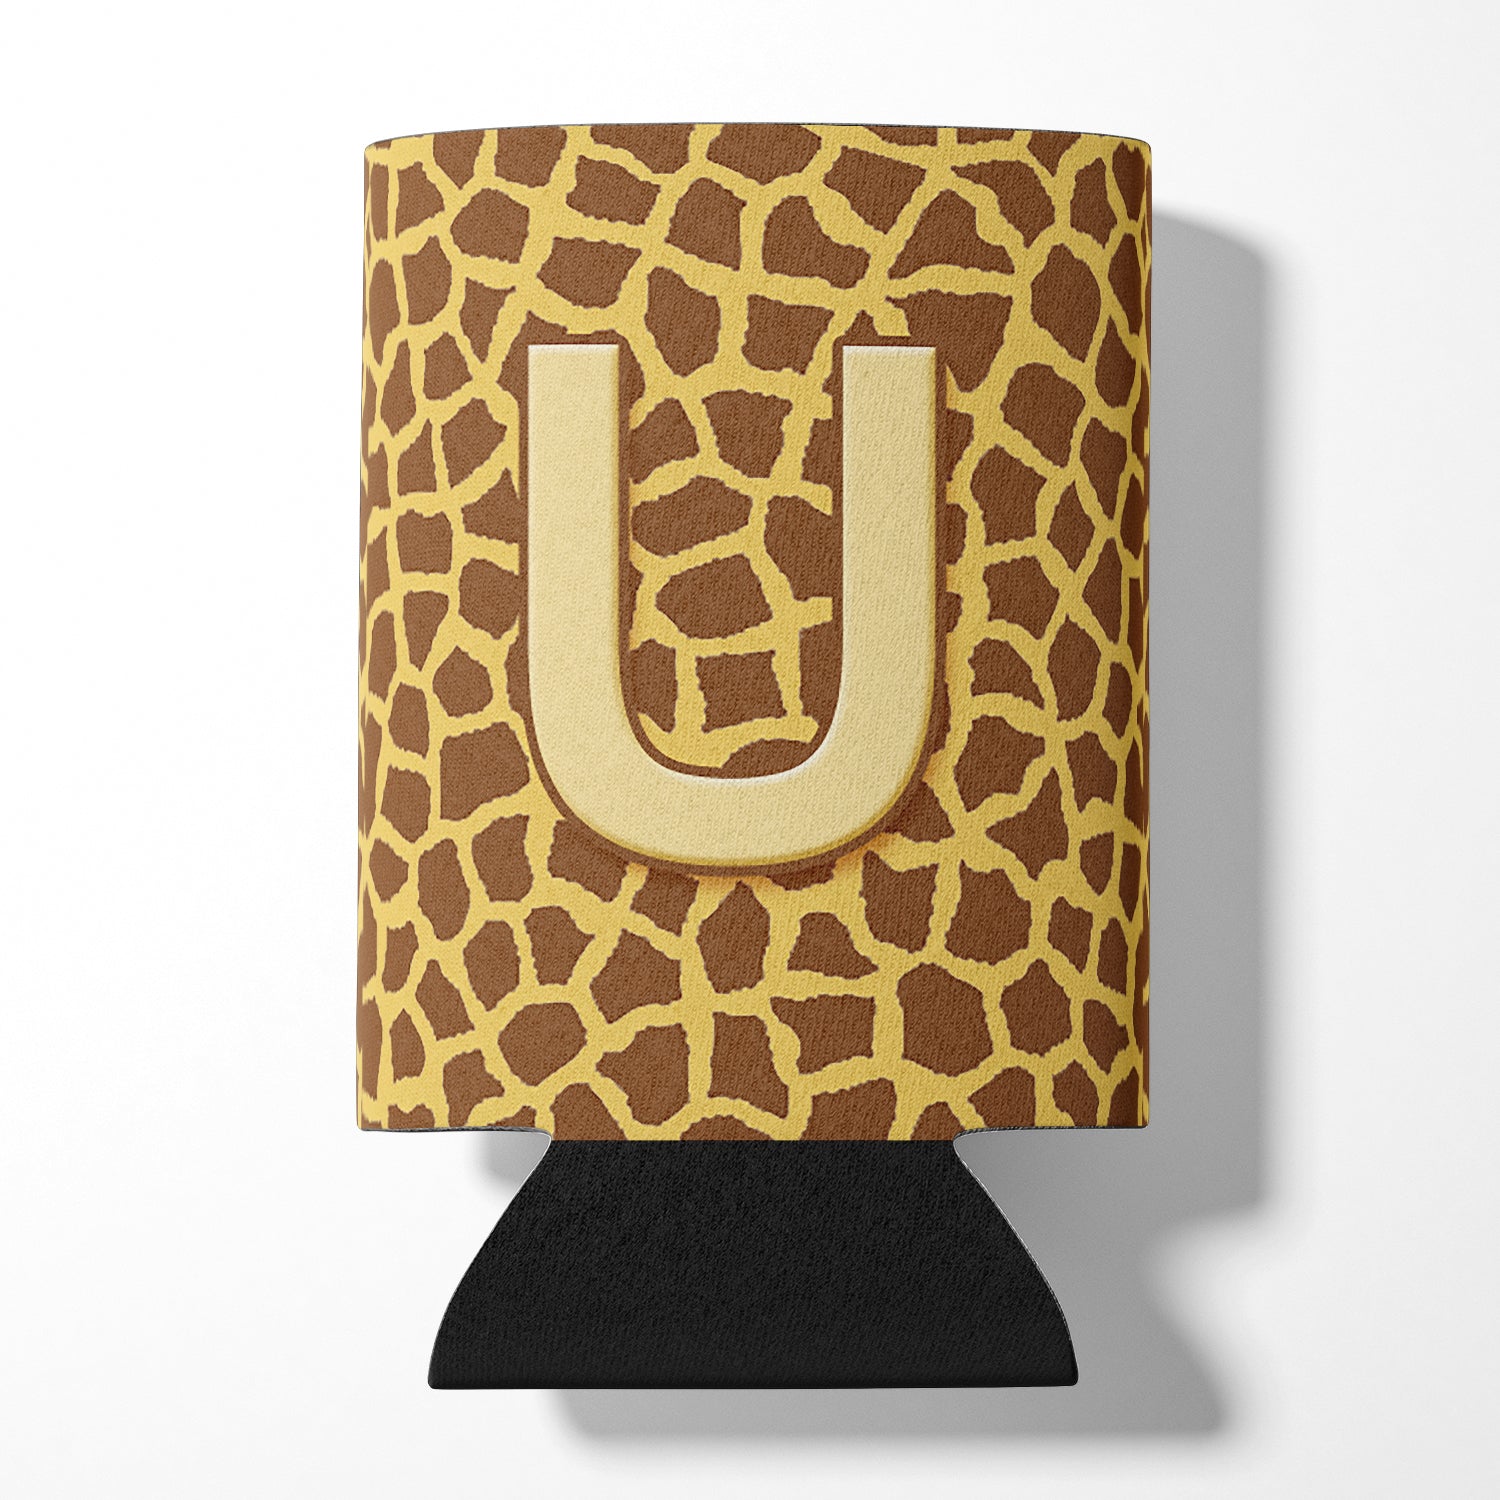 Lettre U monogramme initial - girafe peut ou bouteille boisson isolant Hugger